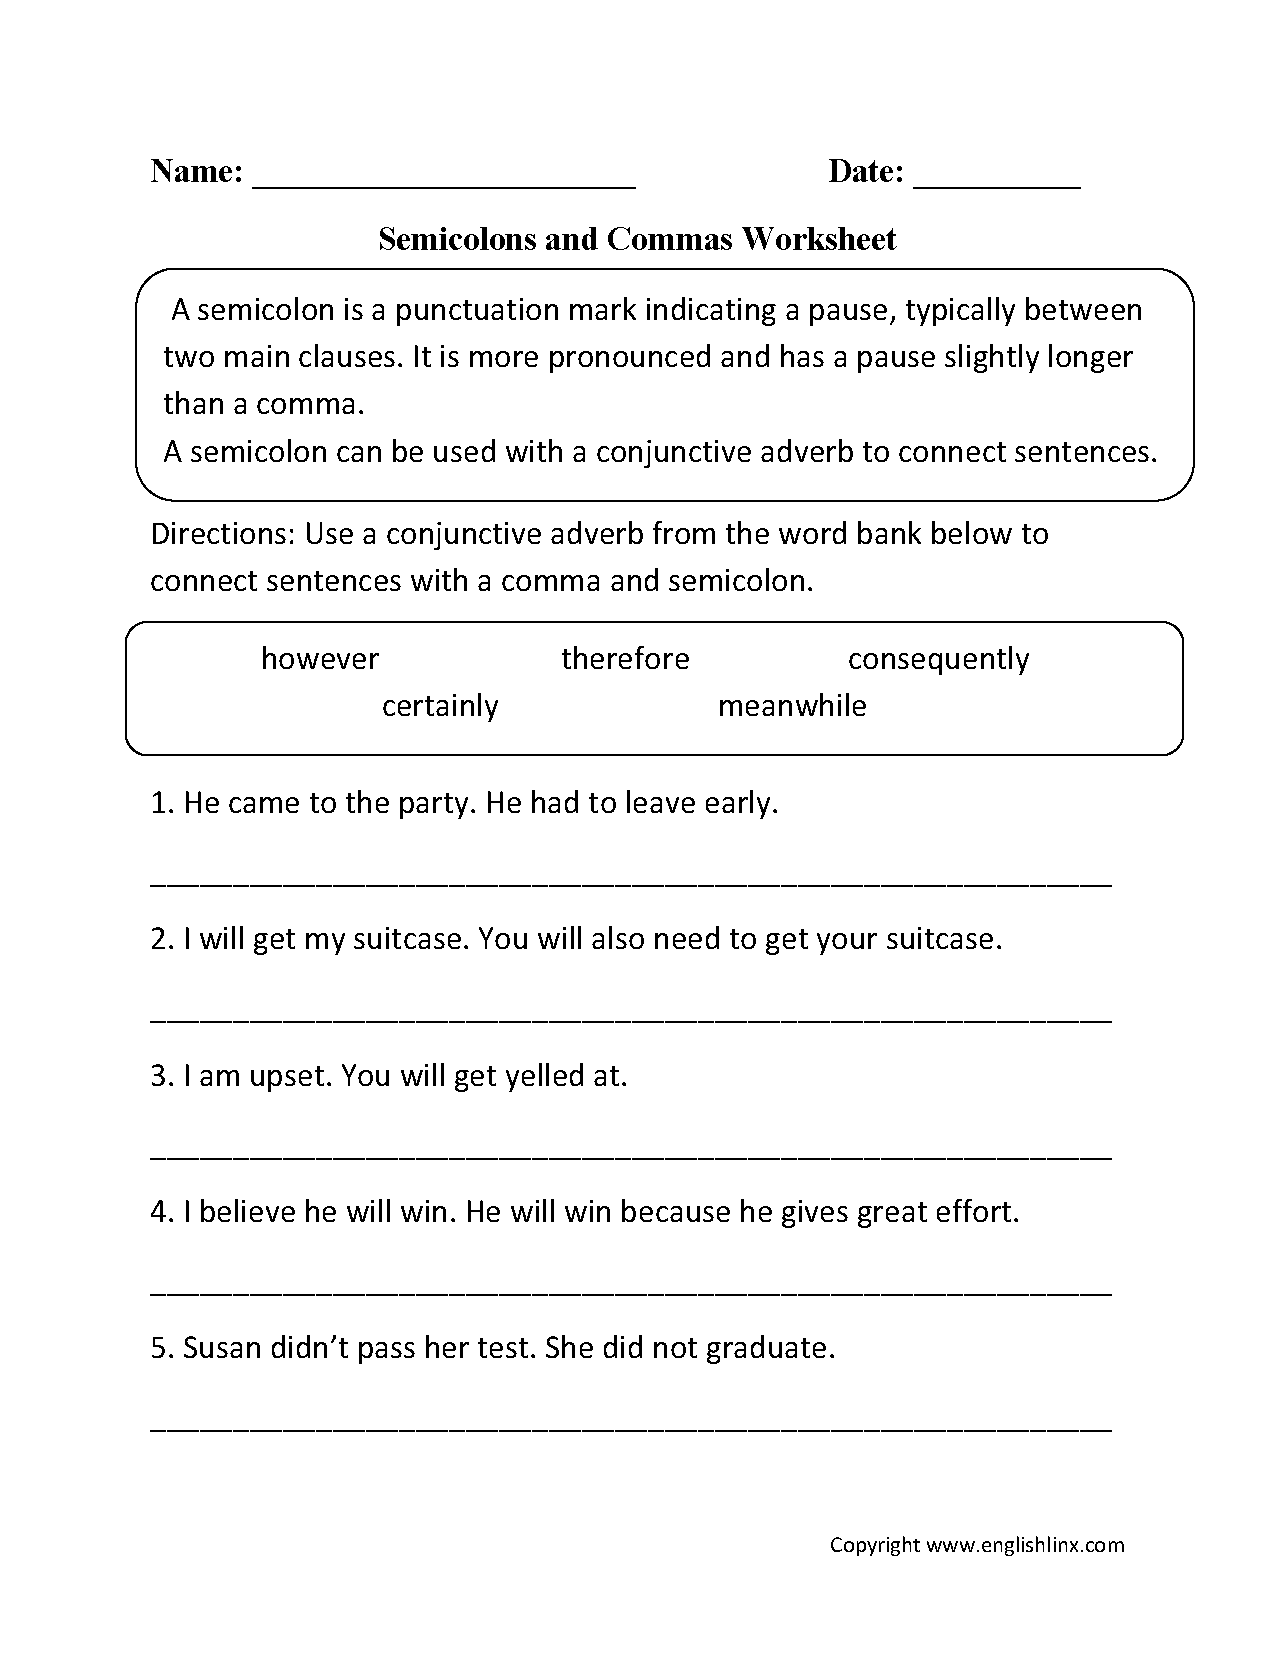 Semicolon and Commas Worksheet